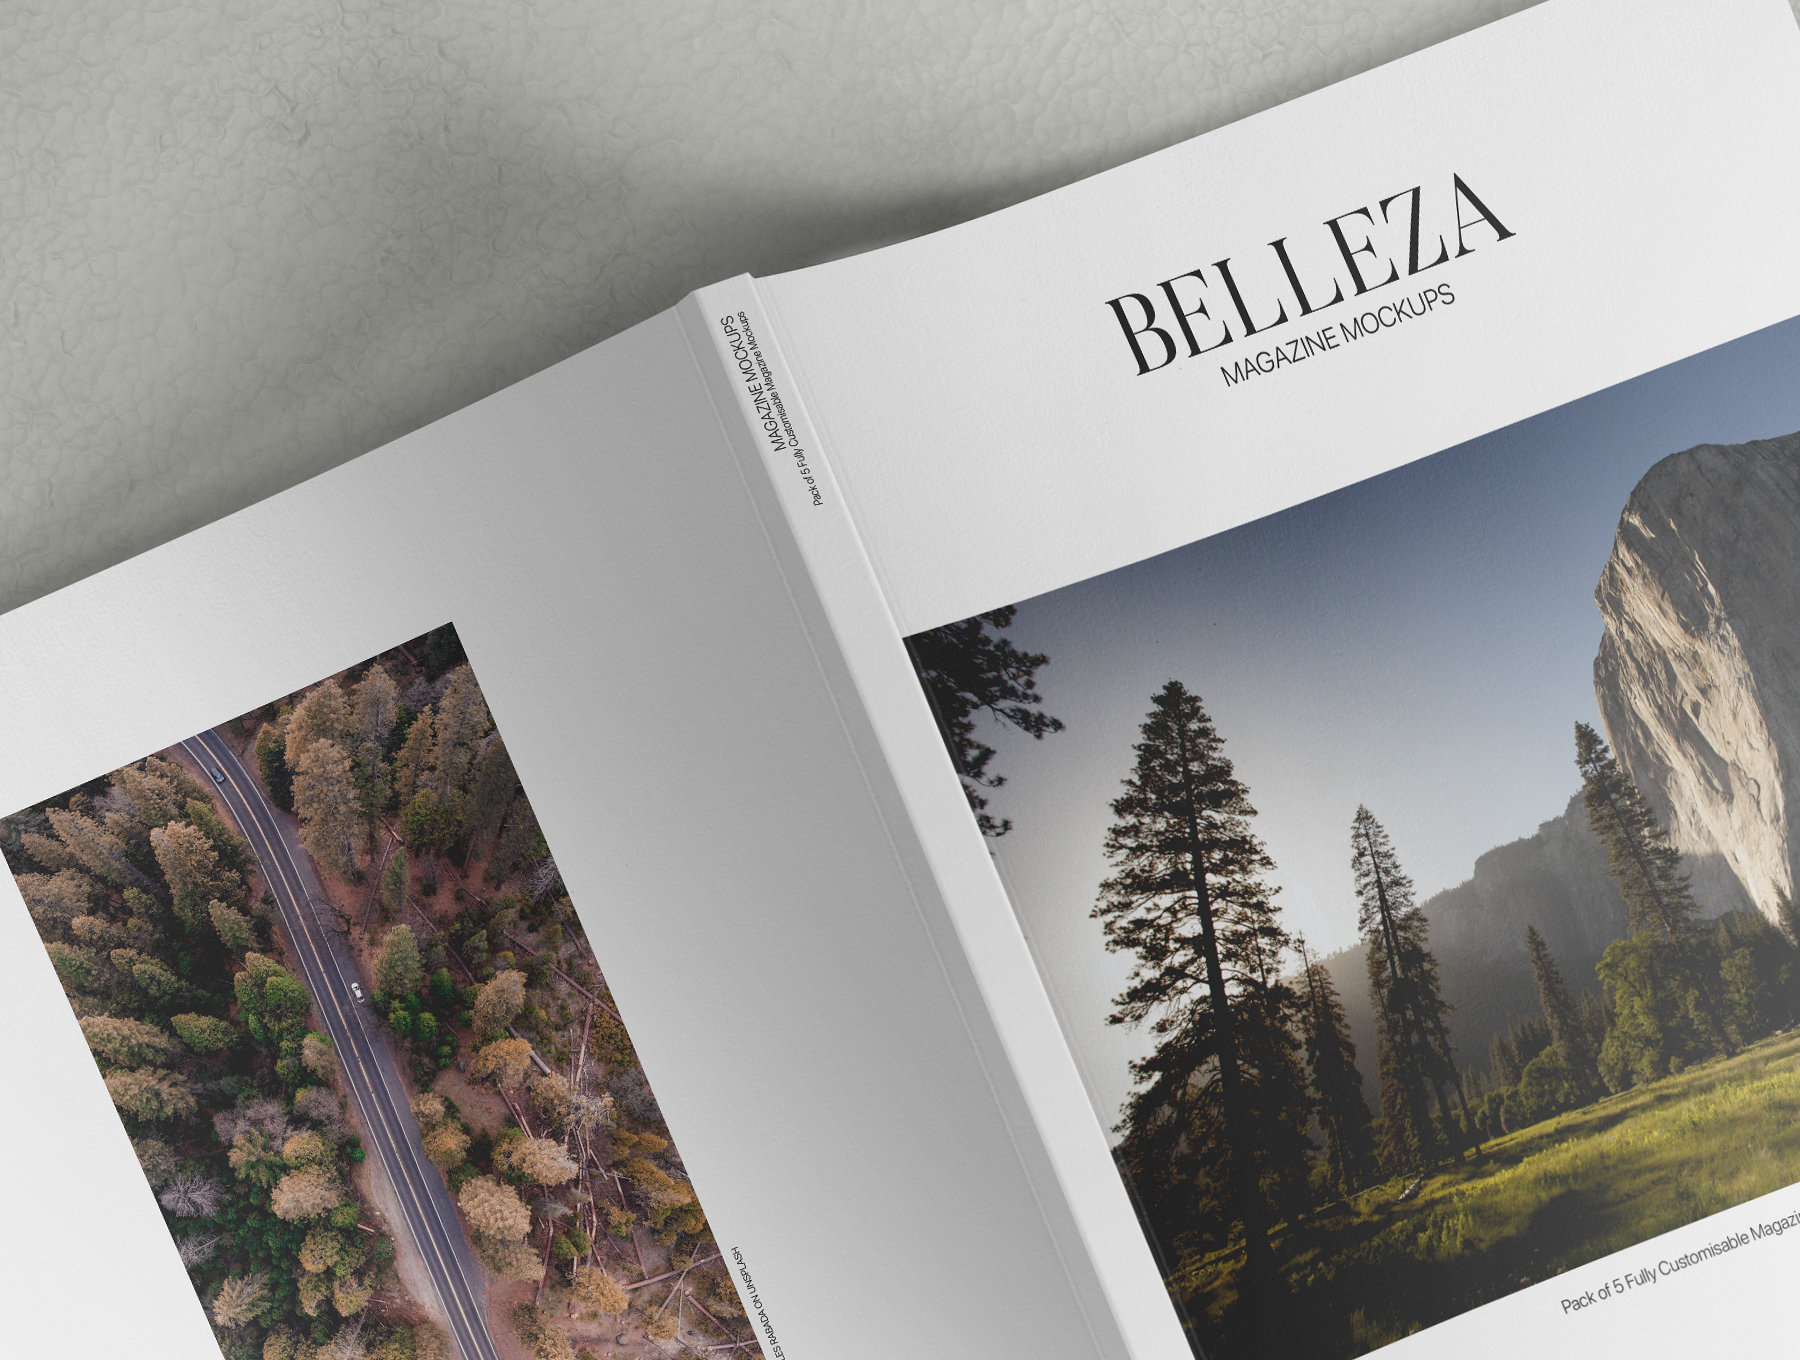 Belleza - A4 Magazine Mockups Pack A4杂志样机包-产品展示、优雅样机、创意展示、办公样机、名片杂志、实景样机、样机-到位啦UI